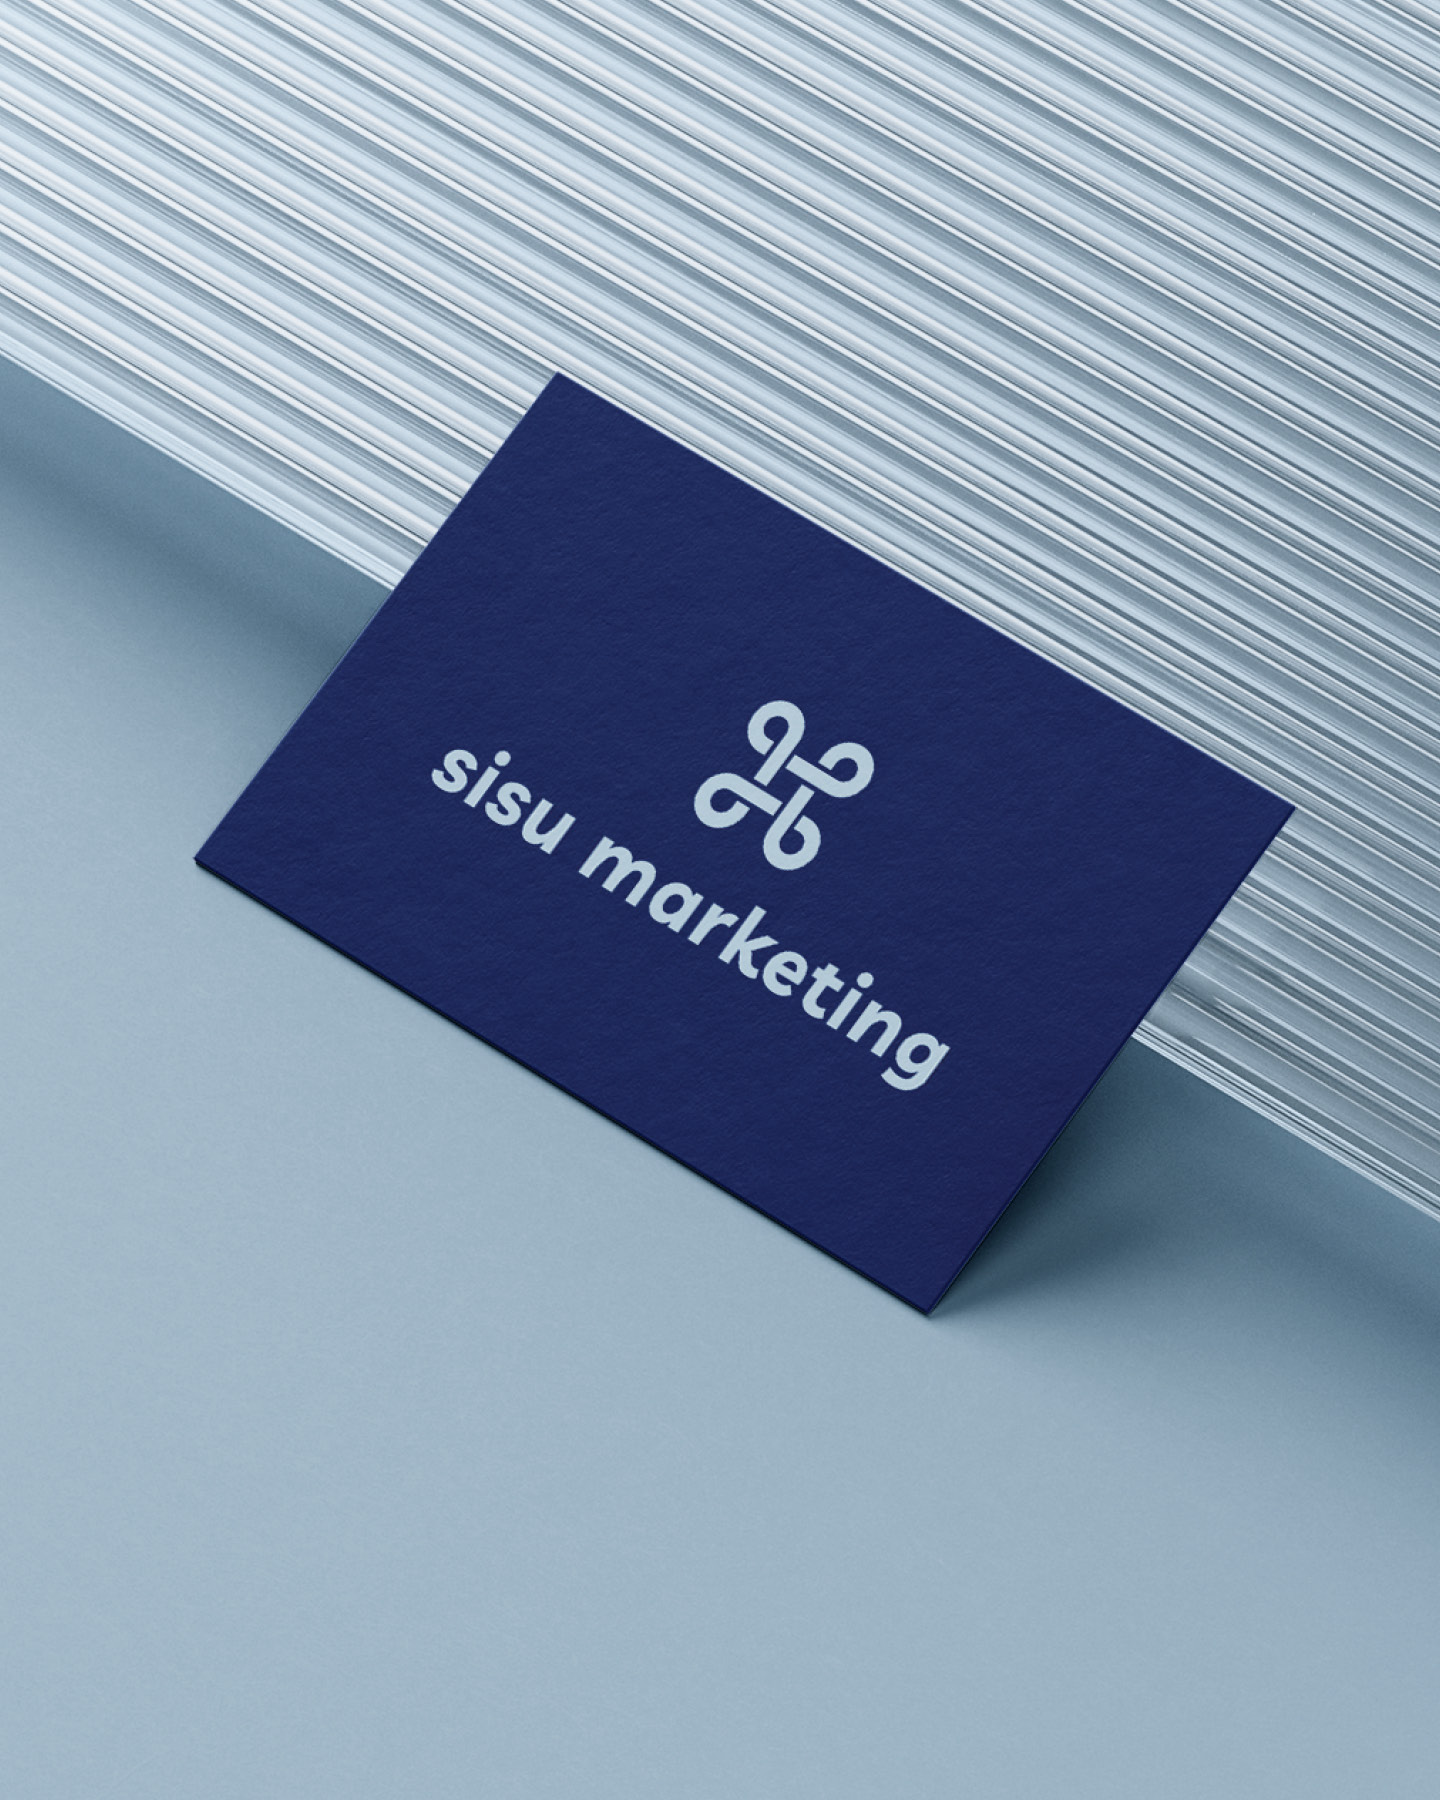 mockup of sisu marketing's business cards by corliss design